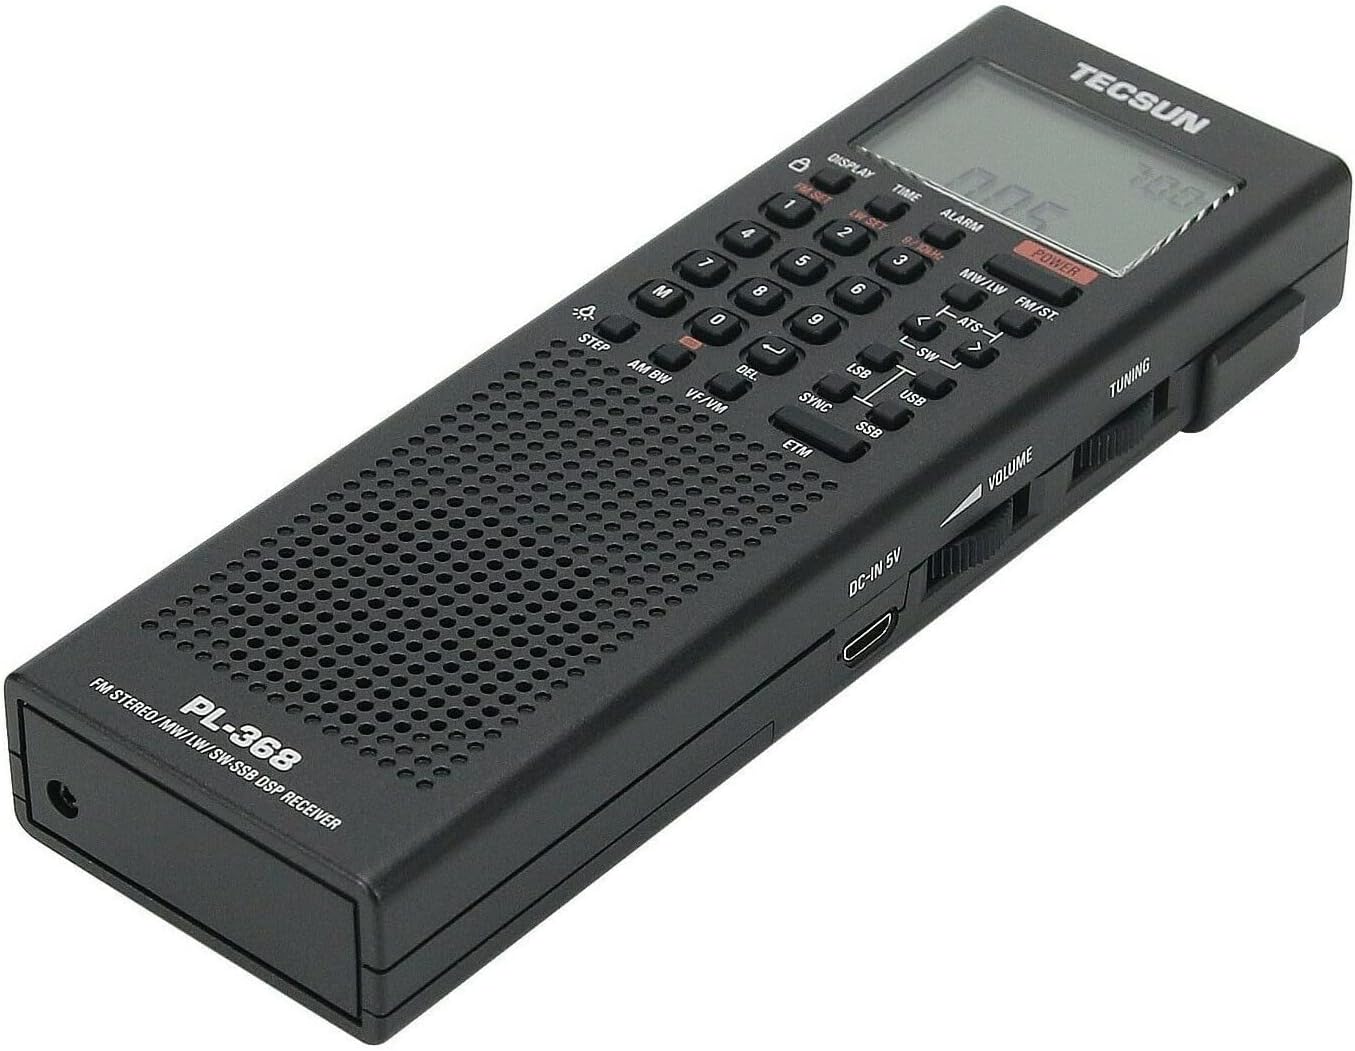 Tecsun PL-368 Portable Radio FM Stereo SSB DSP ETM ATS FM MW Shortwave World Band Receiver